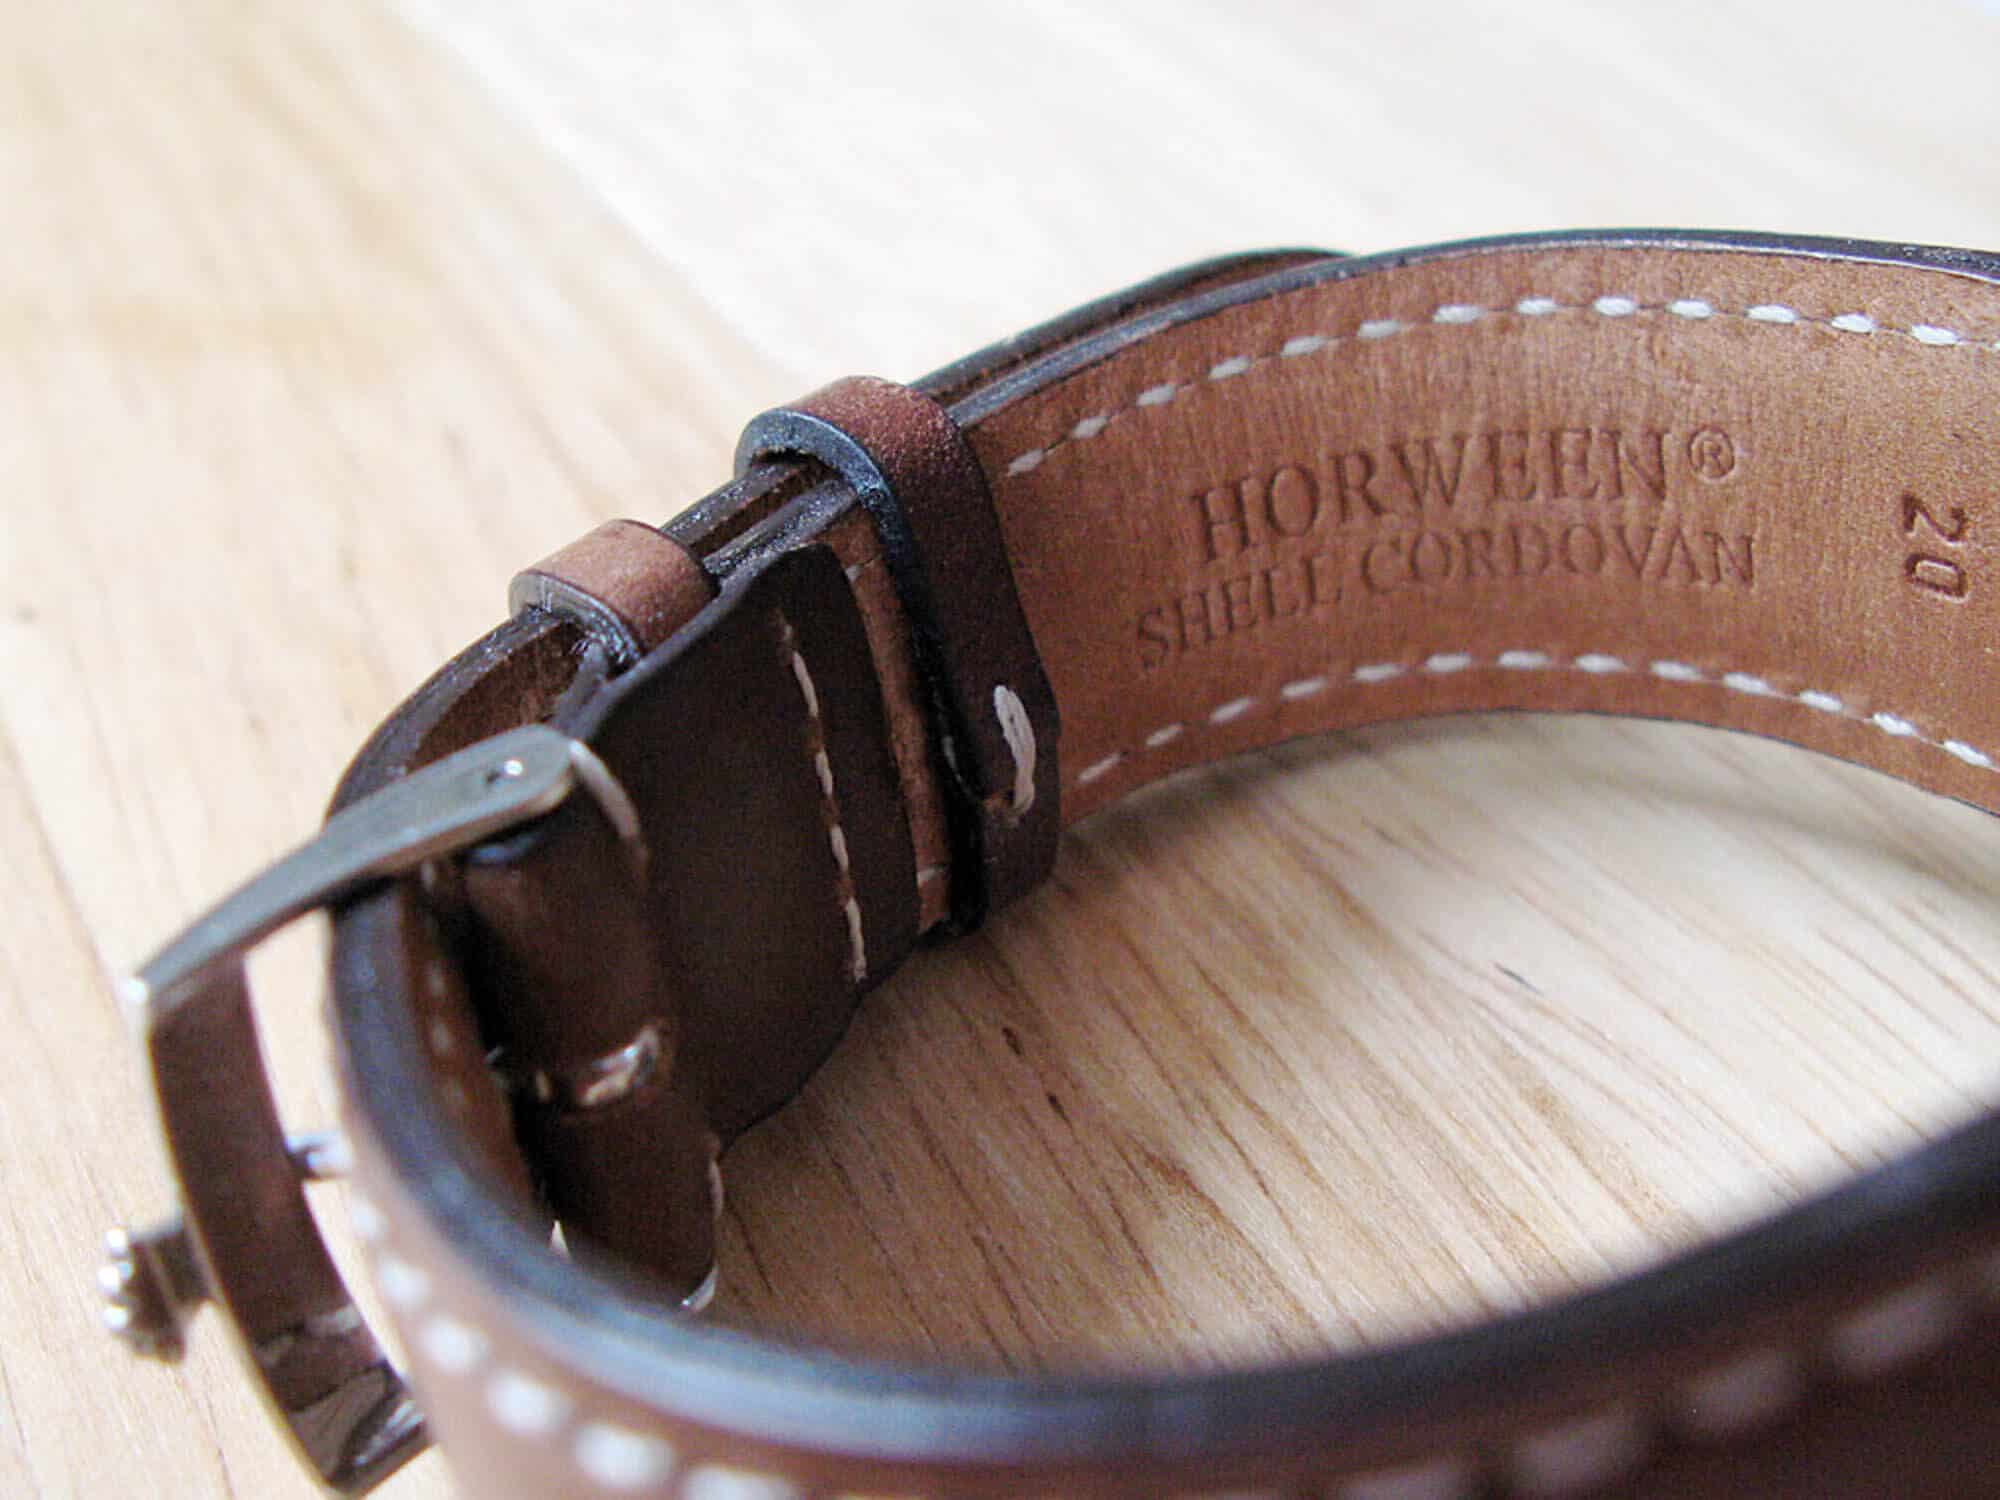 A Horween Cordovan watch strap.